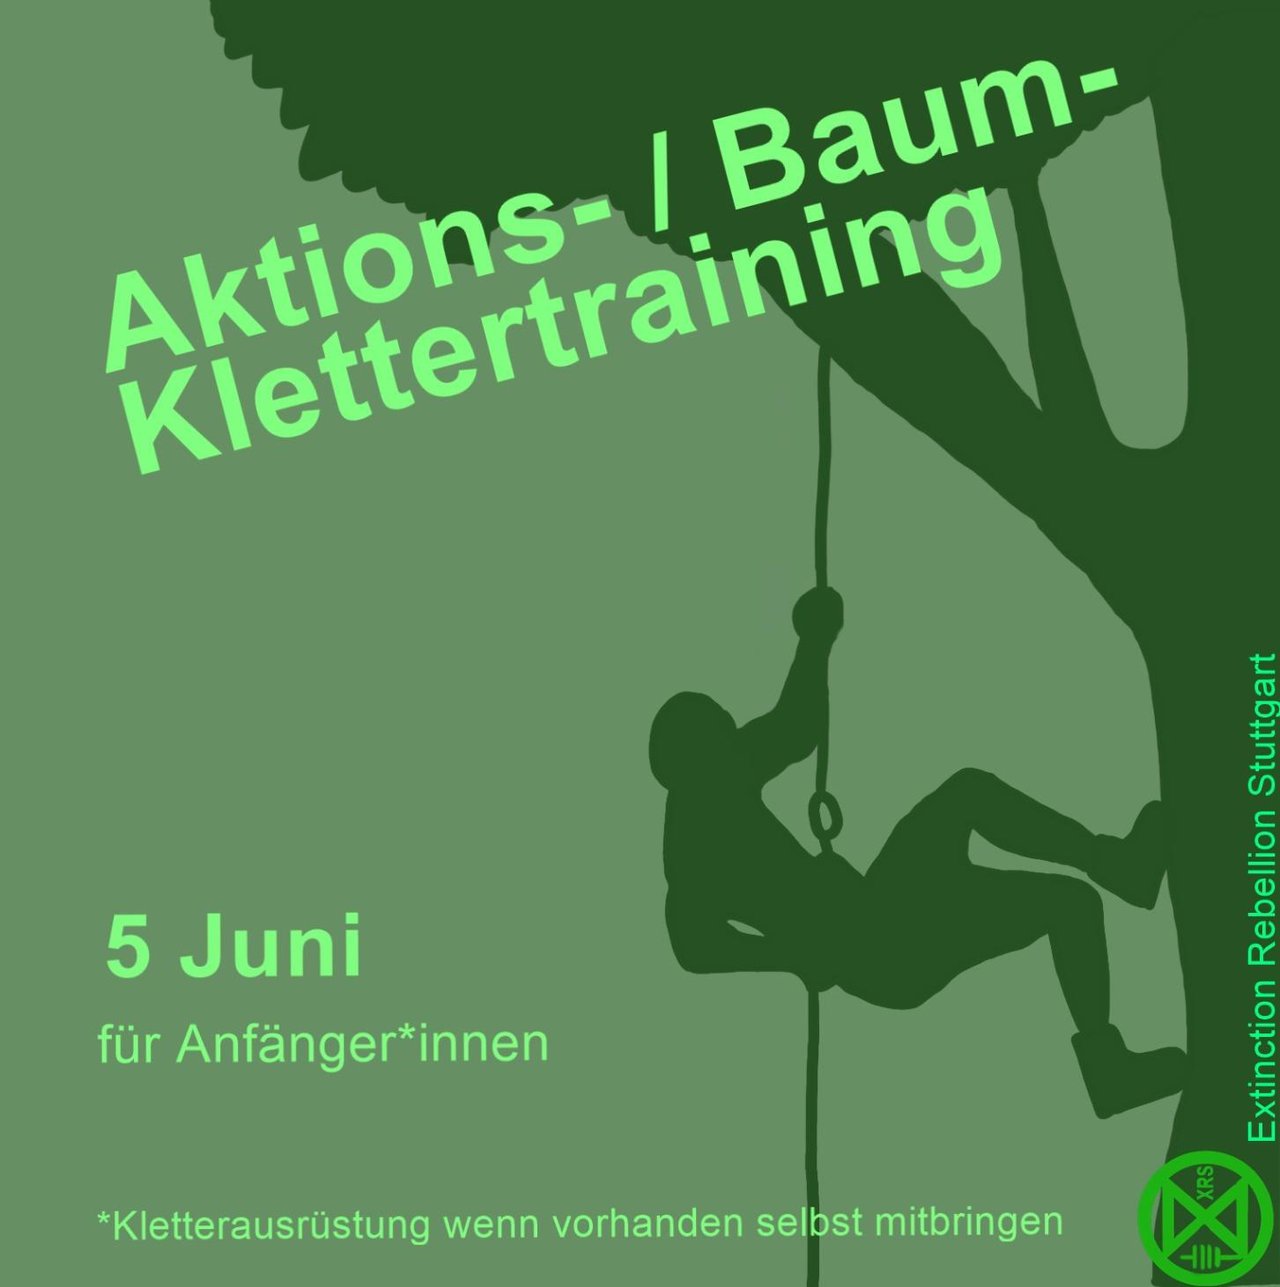 Aktions-/Baumklettertraining